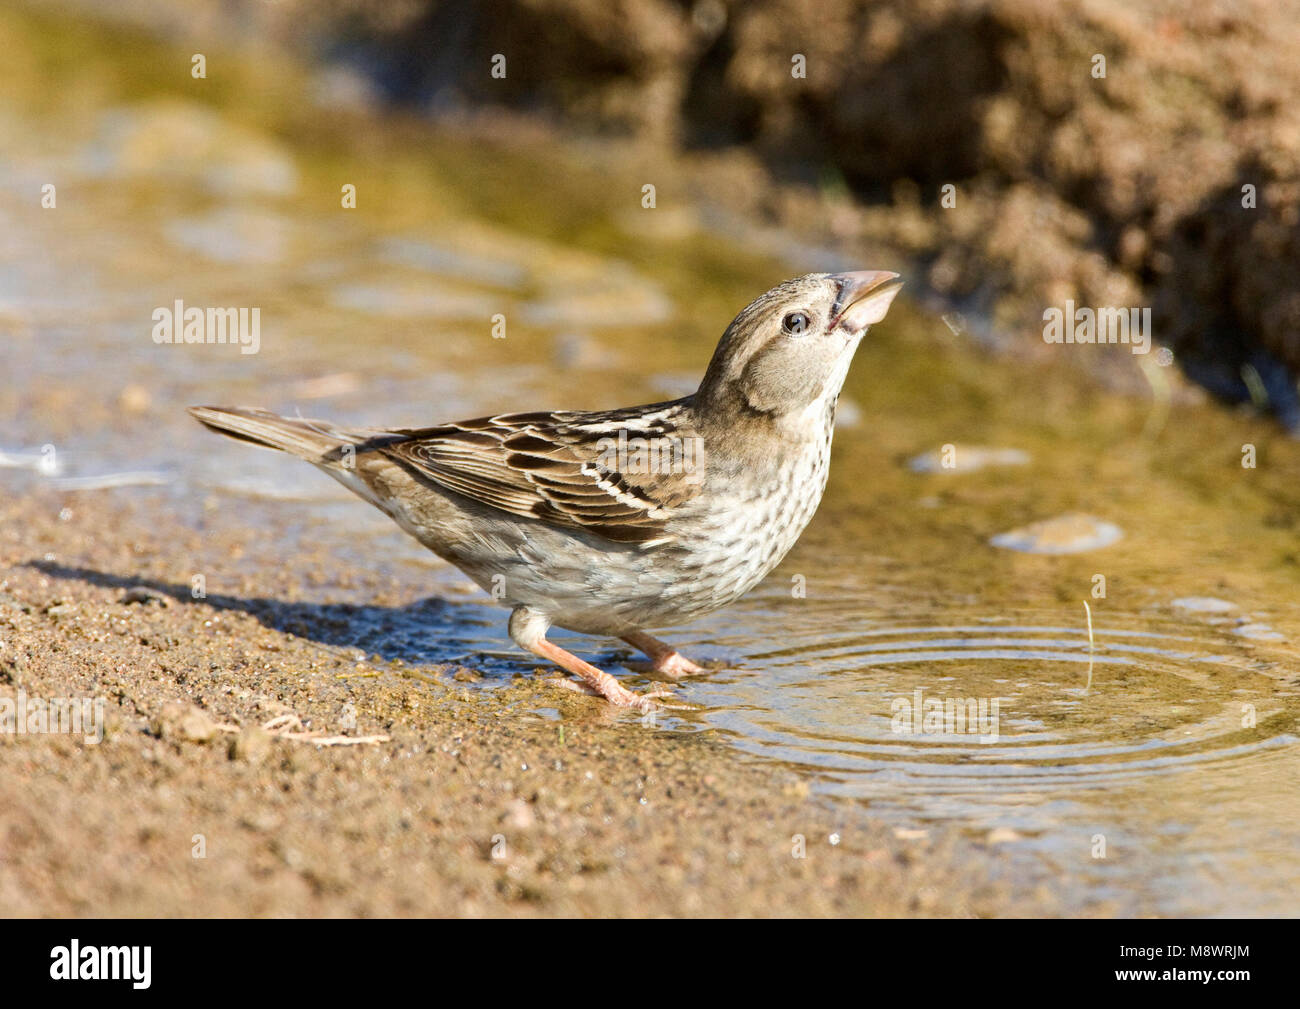 Vrouwtje Spaanse Mus; femenino español Sparrow Foto de stock